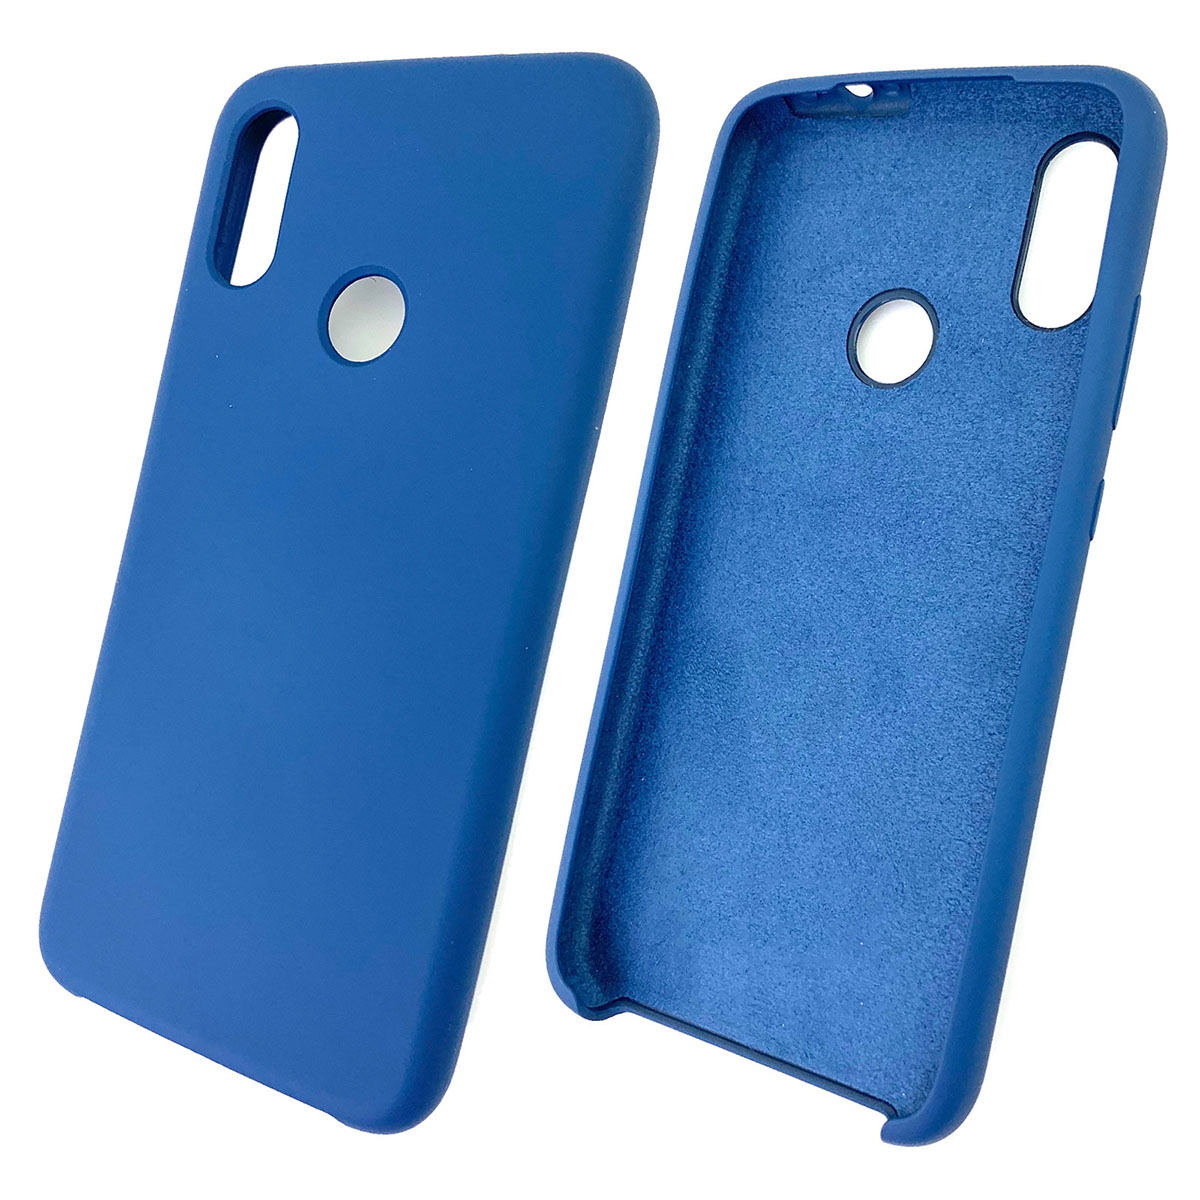 Чехол накладка Silicon Cover для XIAOMI Redmi Note 7, Note 7 Pro, силикон, бархат, цвет синий космос.